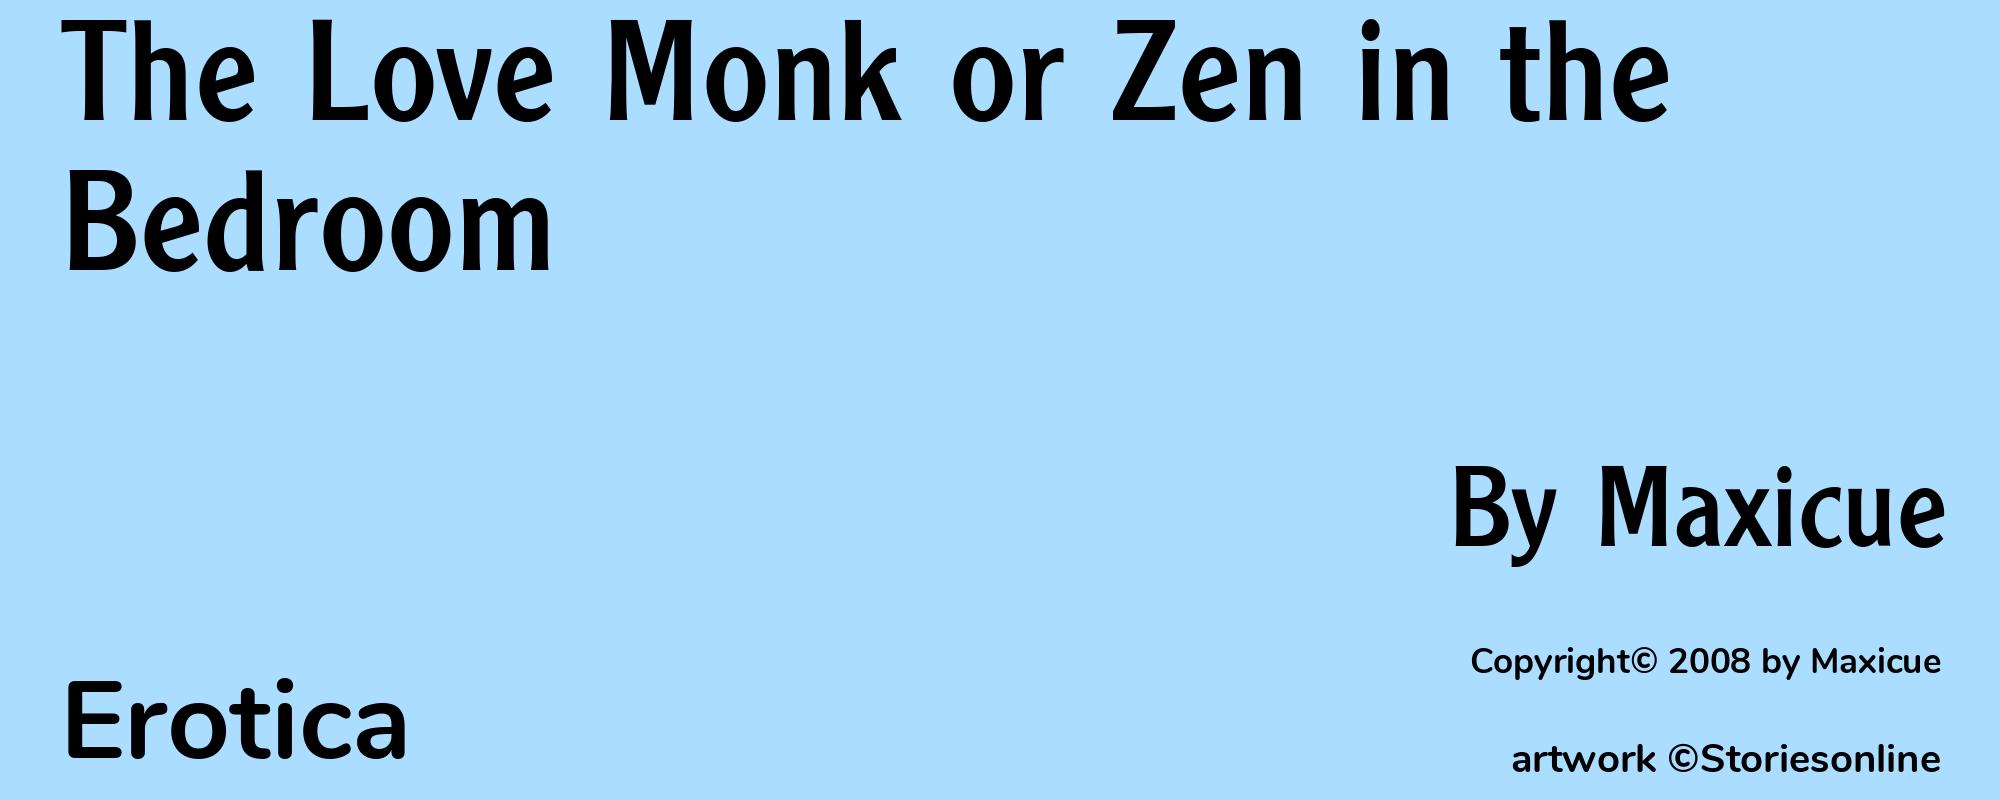 The Love Monk or Zen in the Bedroom - Cover